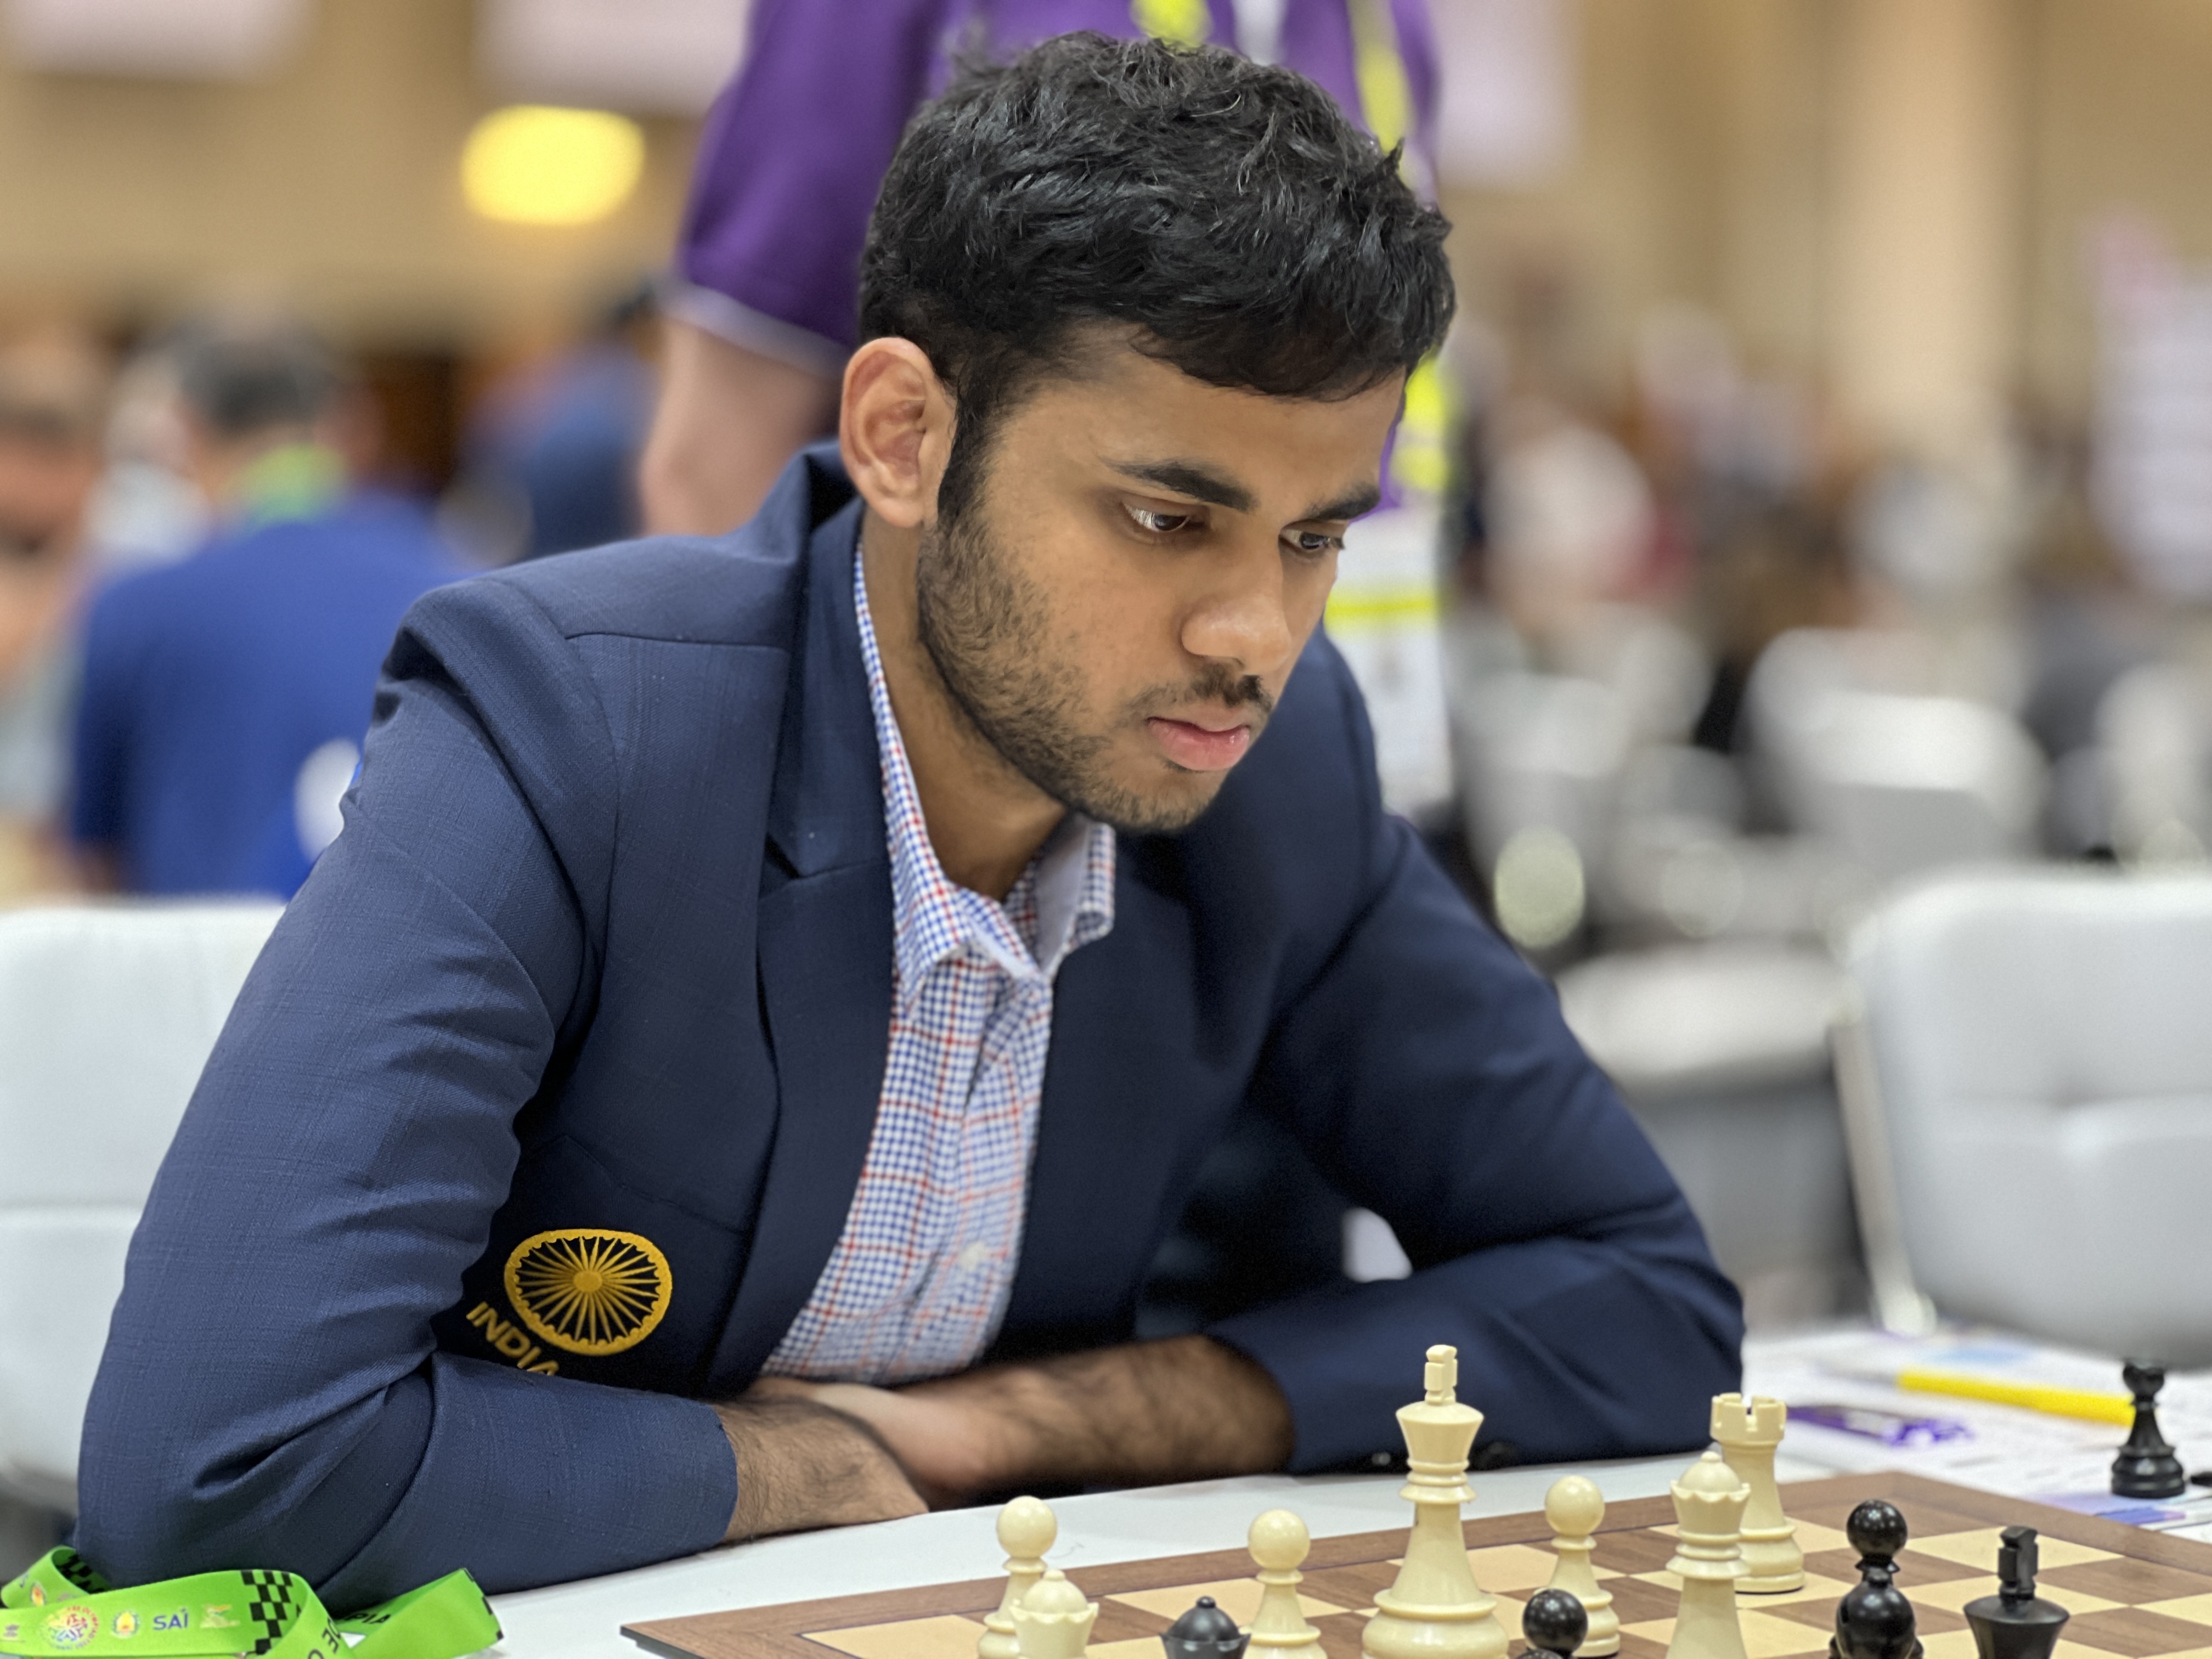 Arjun Erigaisi's knowledge better than ChessBase India sources